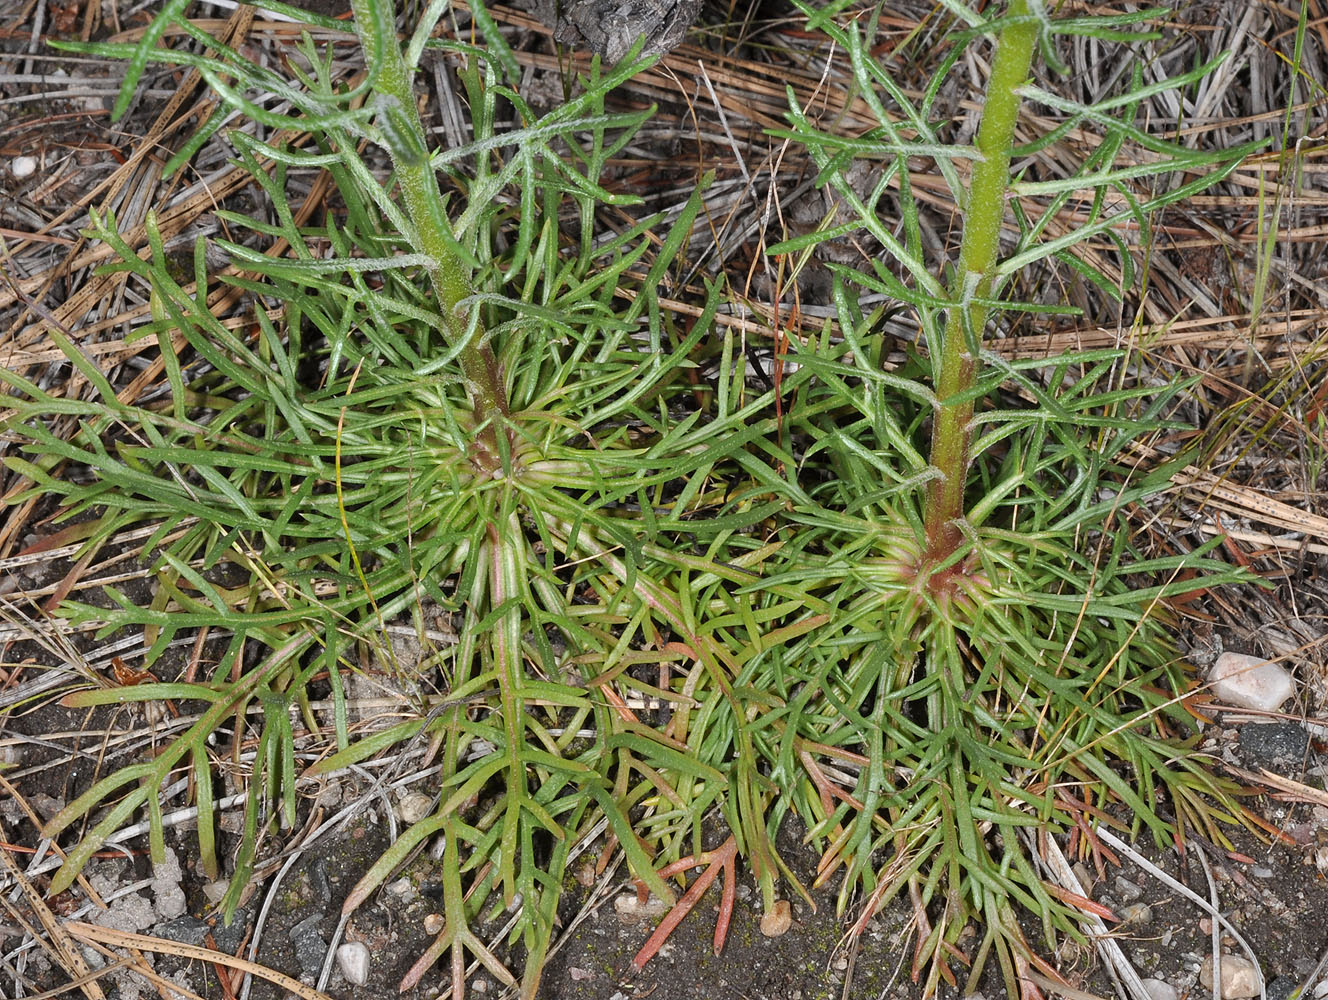 Flora of Eastern Washington Image: Ipomopsis aggregata